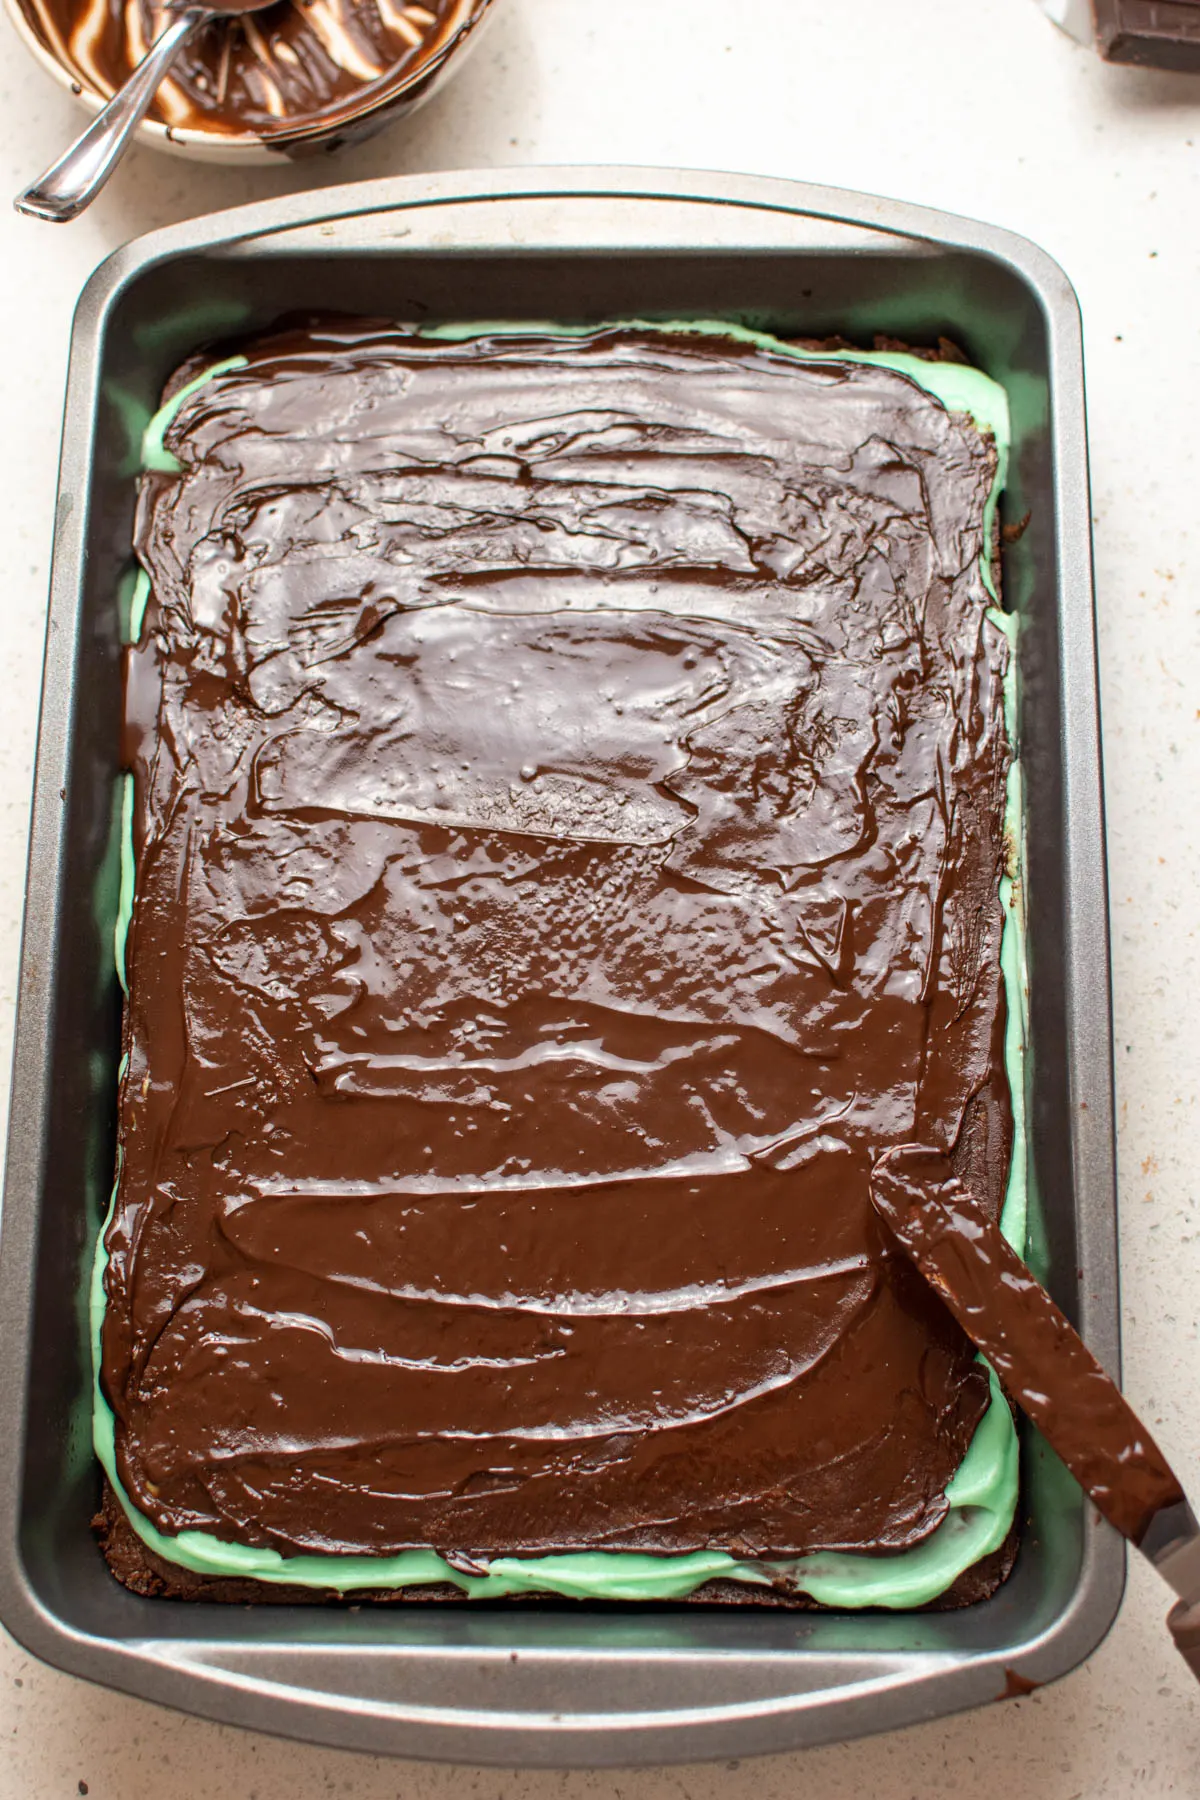 Chocolate ganache spread on pan of mint brownies sitting on quartz countertop.